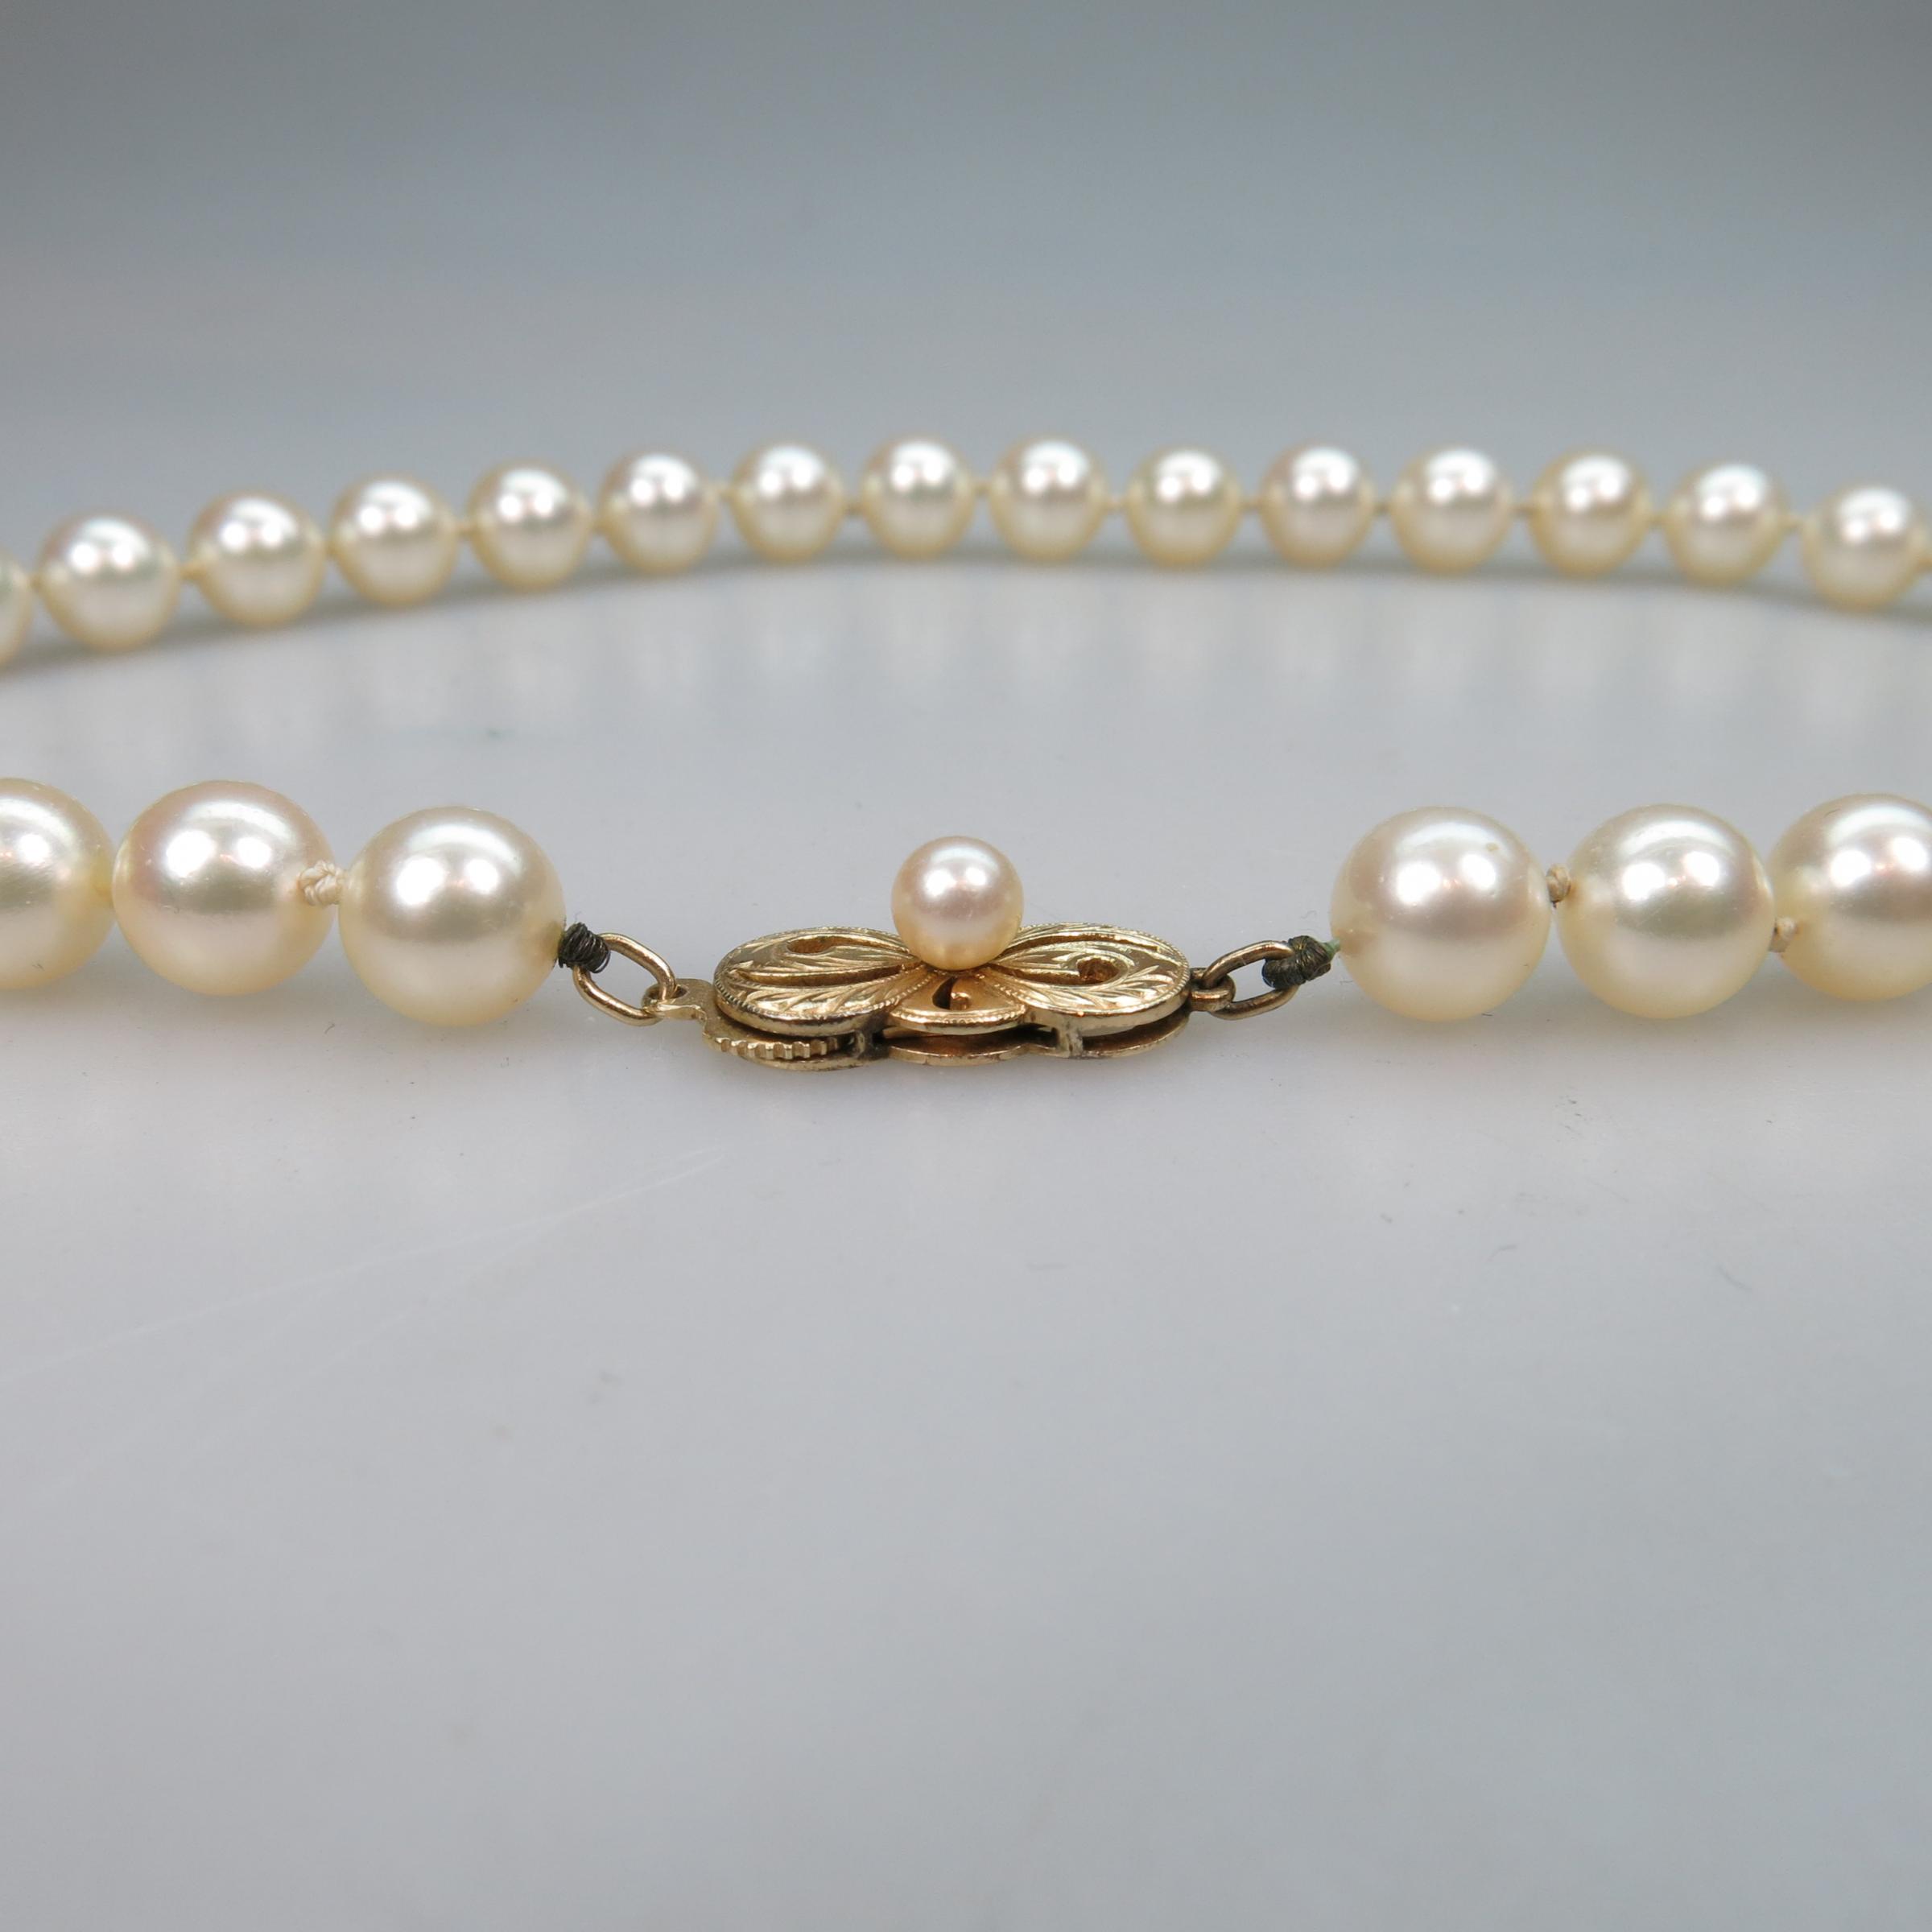 Mikimoto Single Strand Graduated Cultured Pearl Necklace